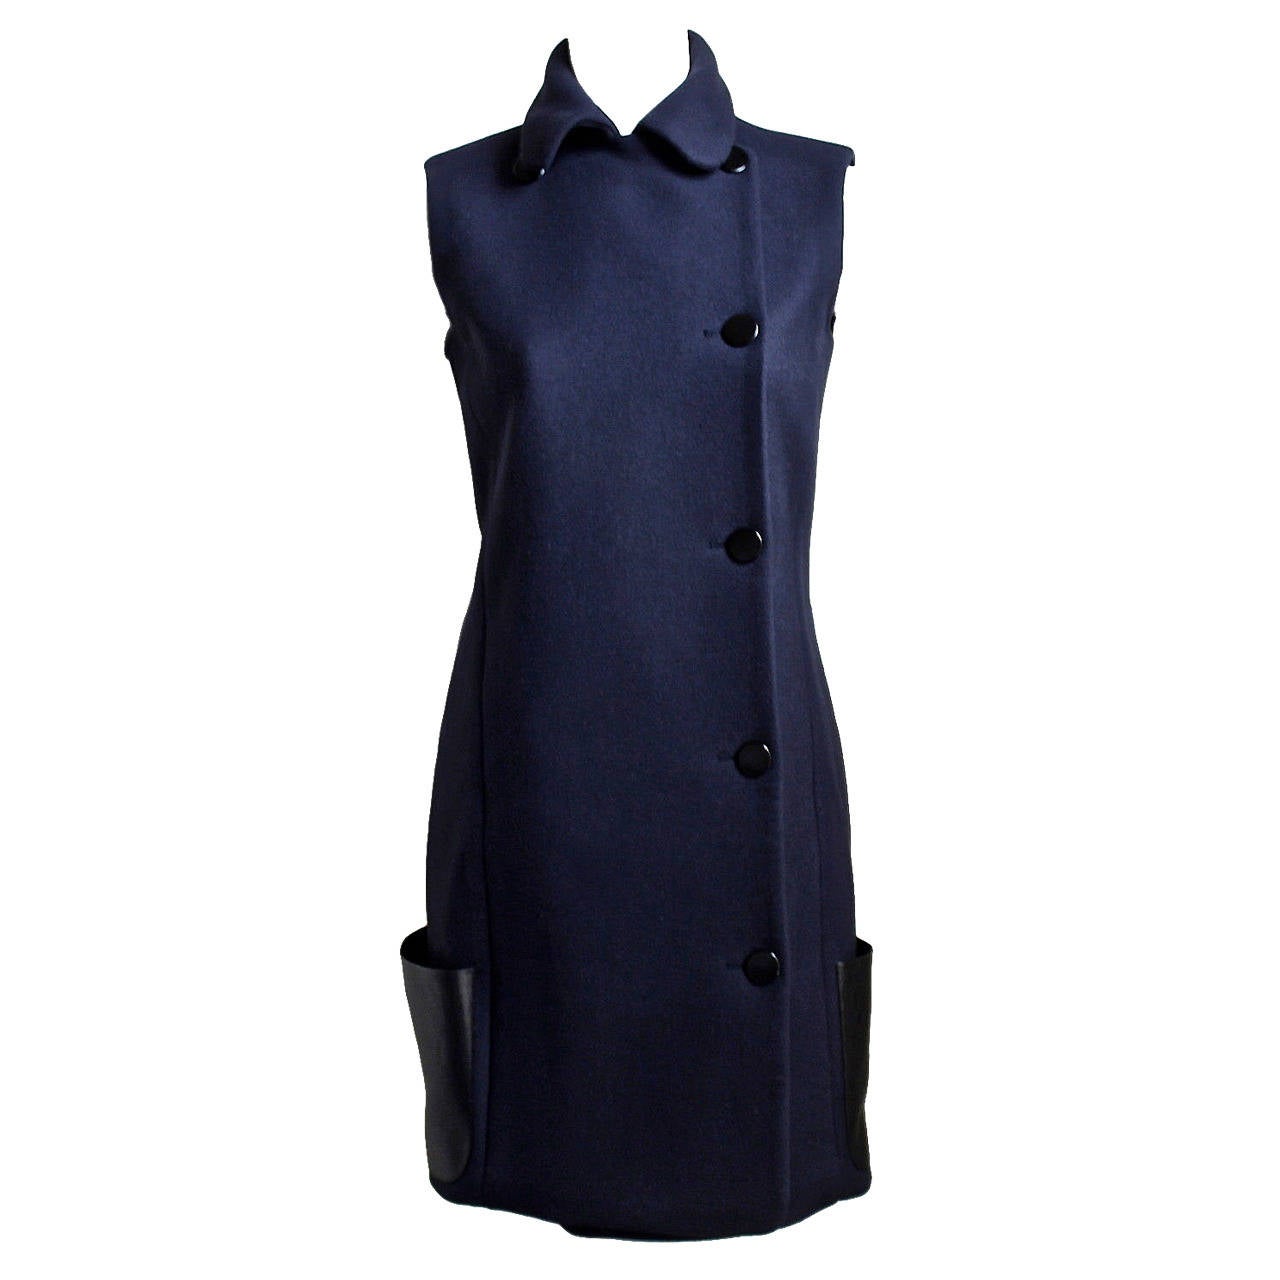 CELINE navy blue coat dress with leather pockets